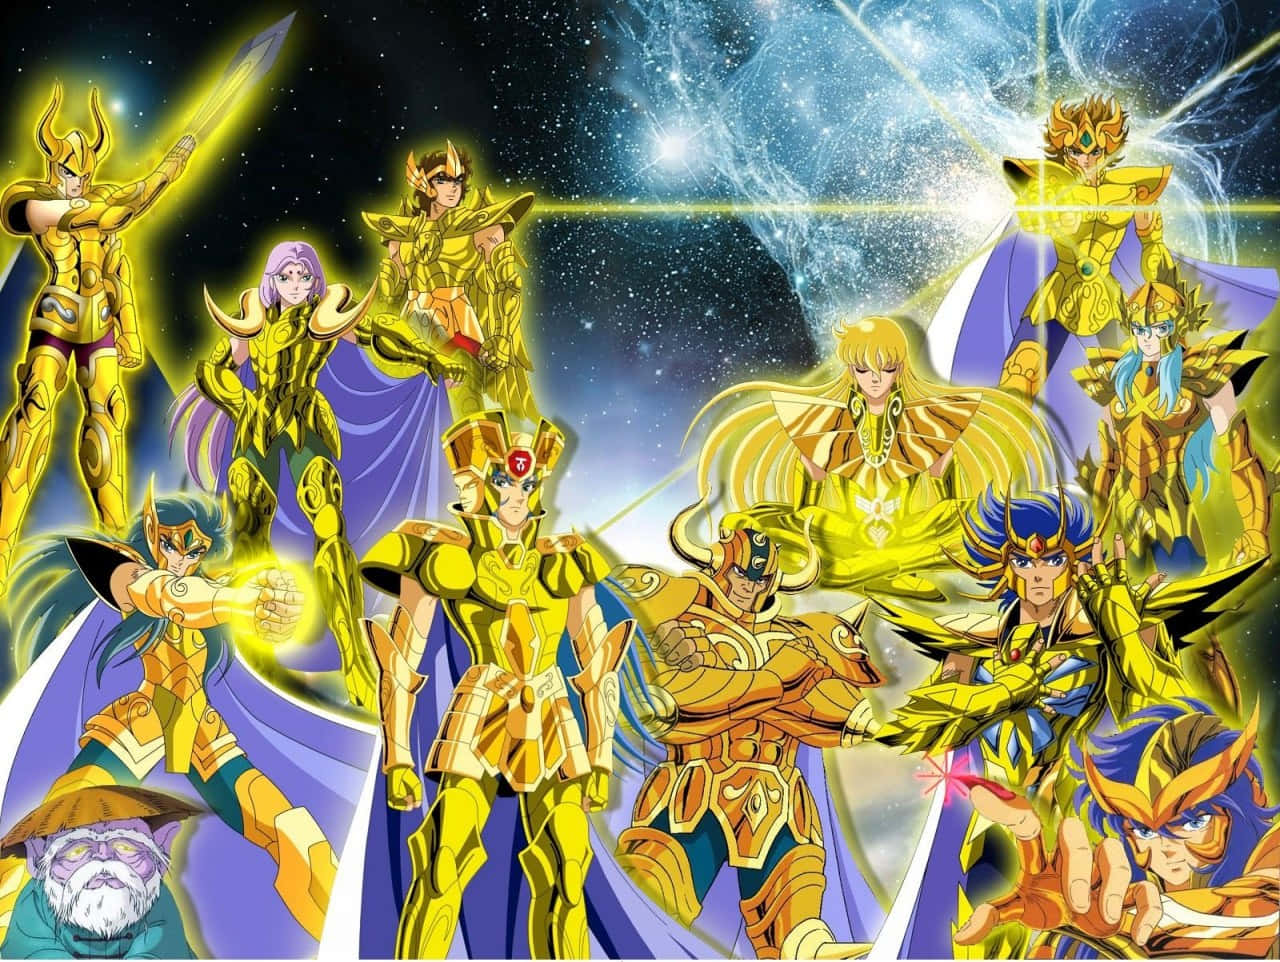 Caption: The Cosmic Warriors - Characters From Saint Seiya Wallpaper